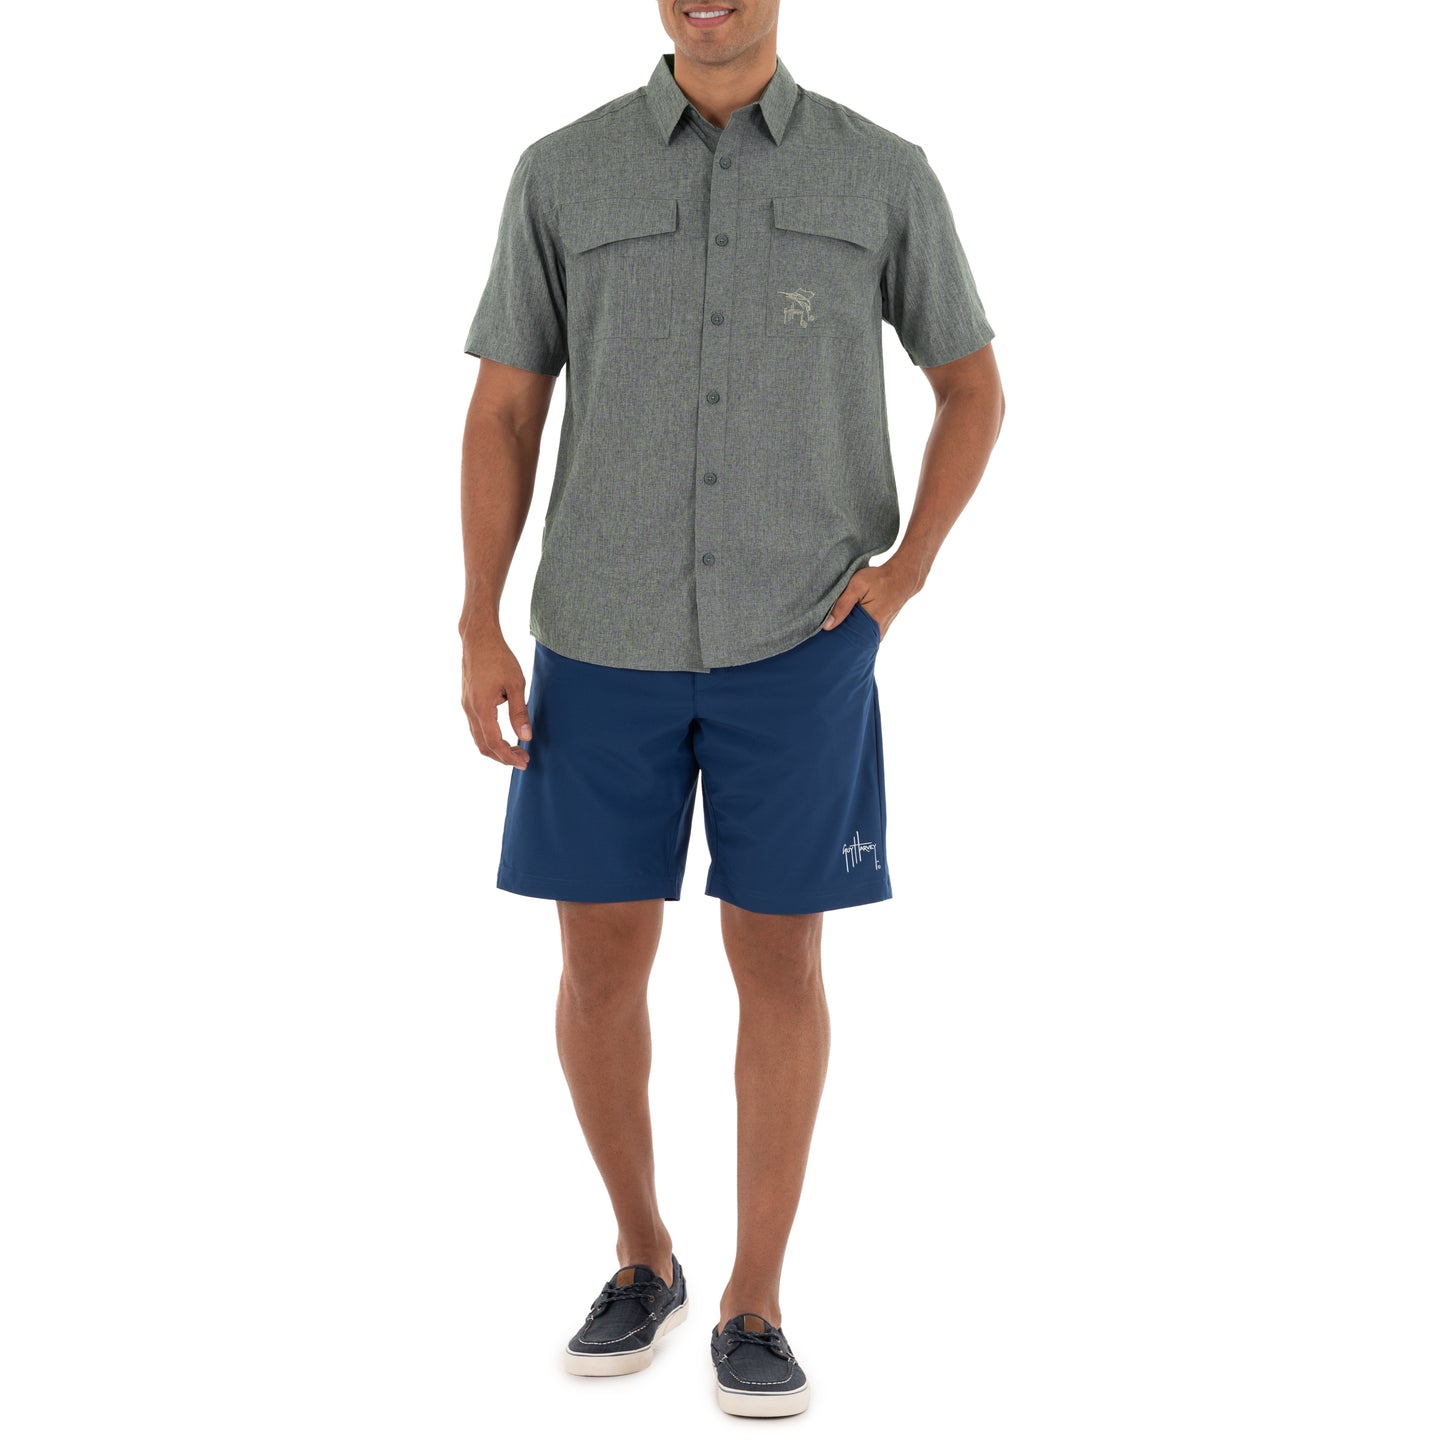 Men's Short Sleeve Heather Textured Cationic Grey Fishing Shirt View 6